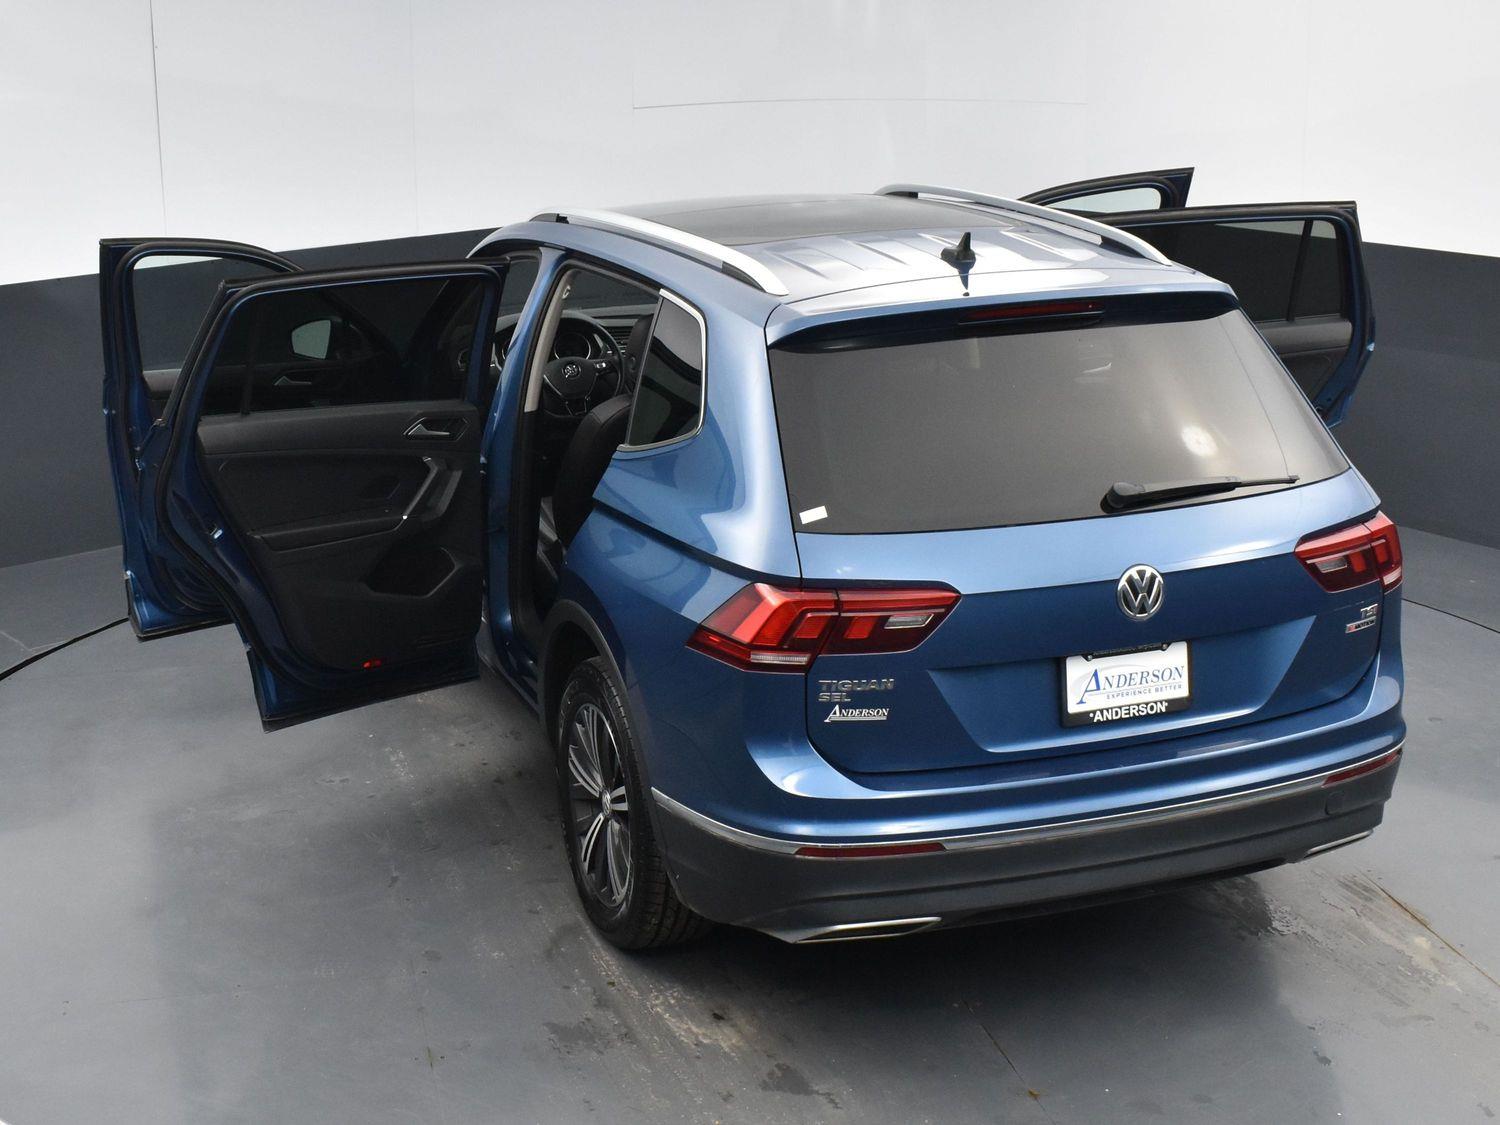 Used 2018 Volkswagen Tiguan SEL 4motion for sale in Grand Island NE